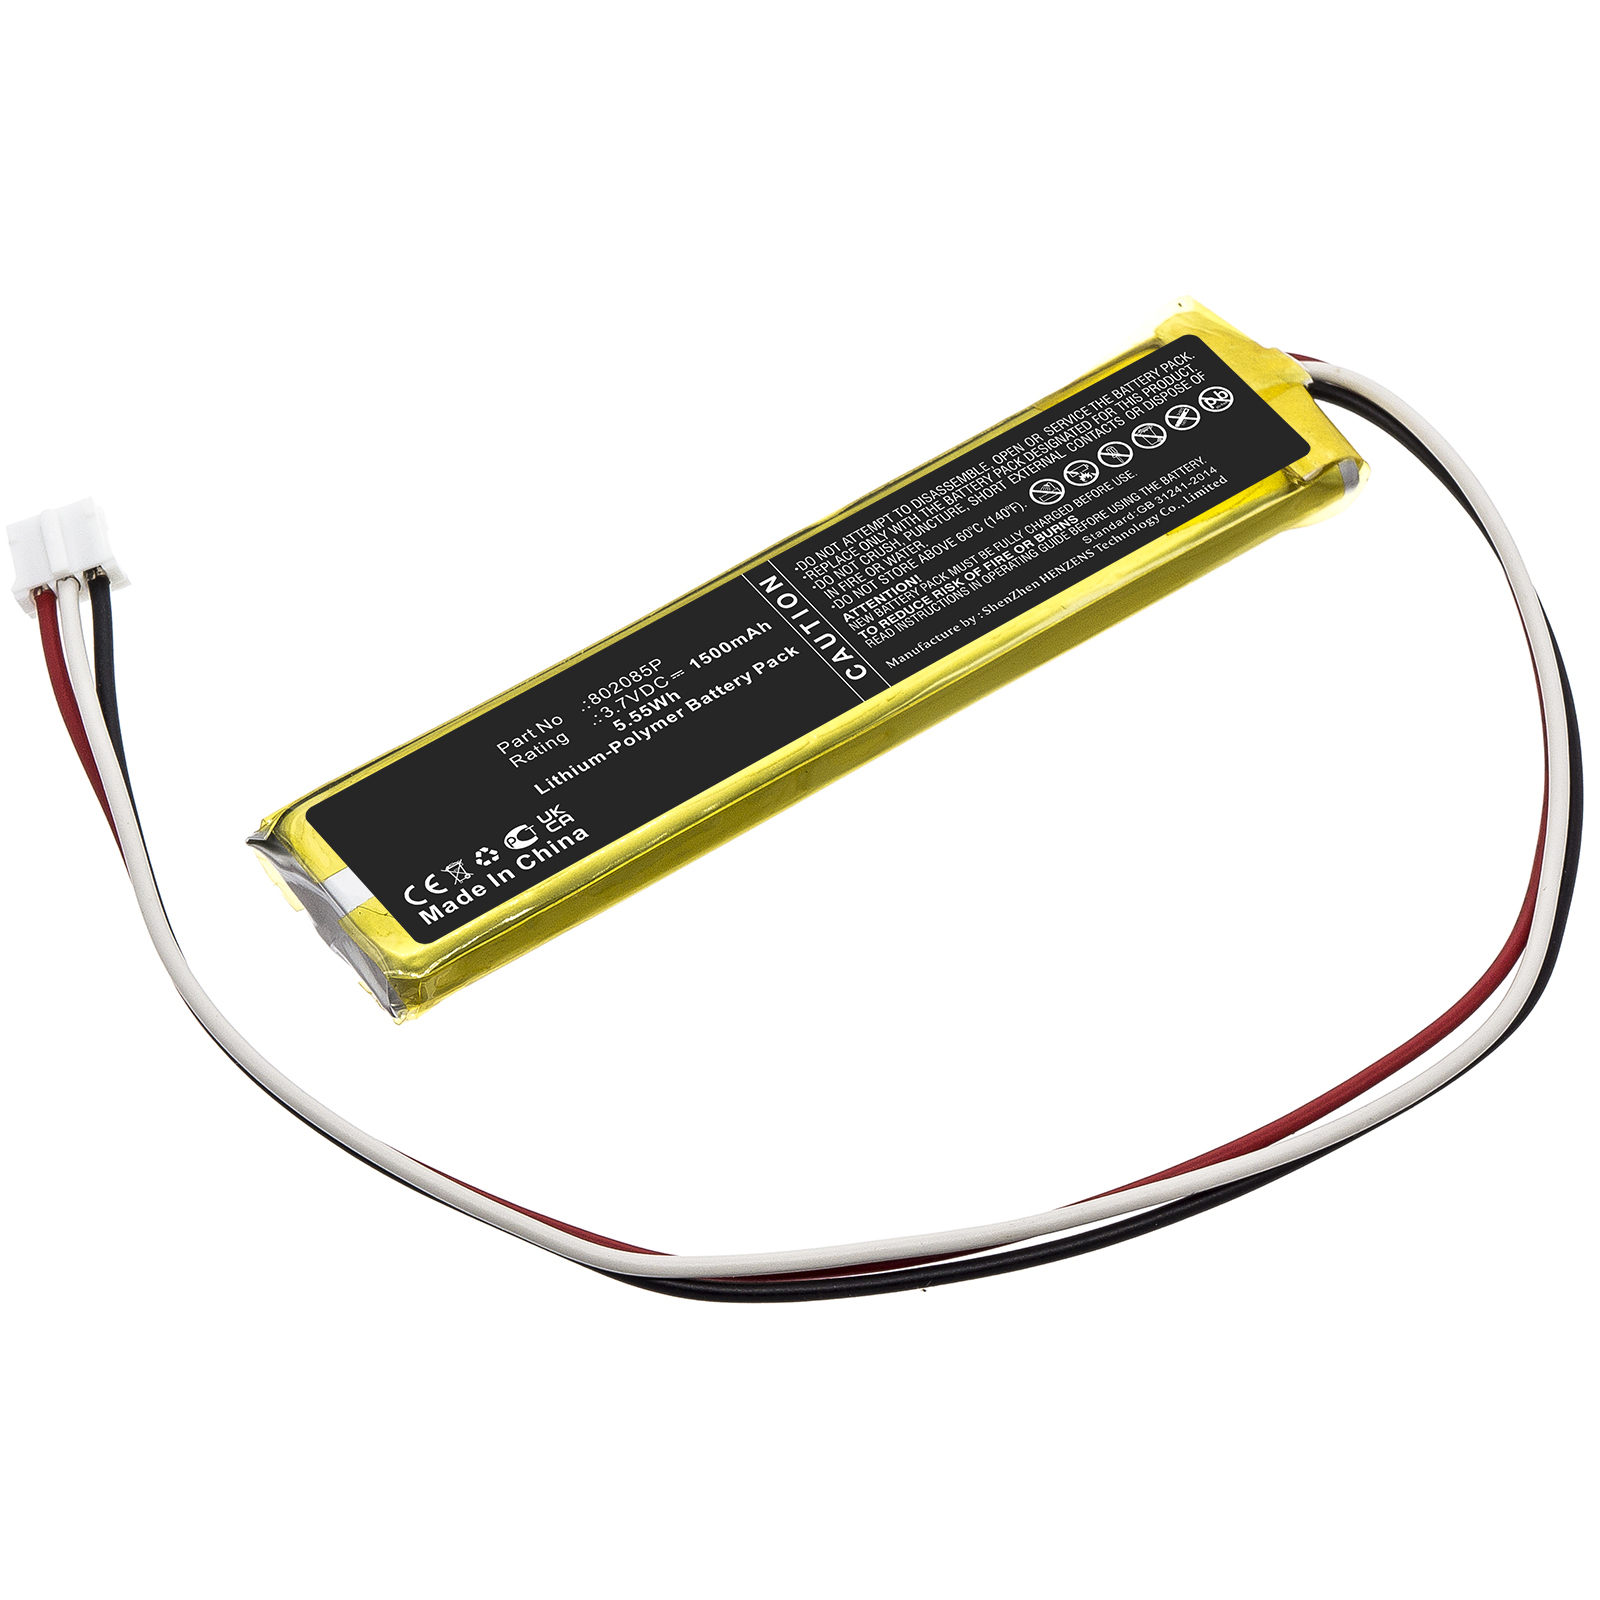 Synergy Digital Keyboard Battery, Compatible with Logitech 802085P Keyboard Battery (Li-Pol, 3.7V, 1500mAh)